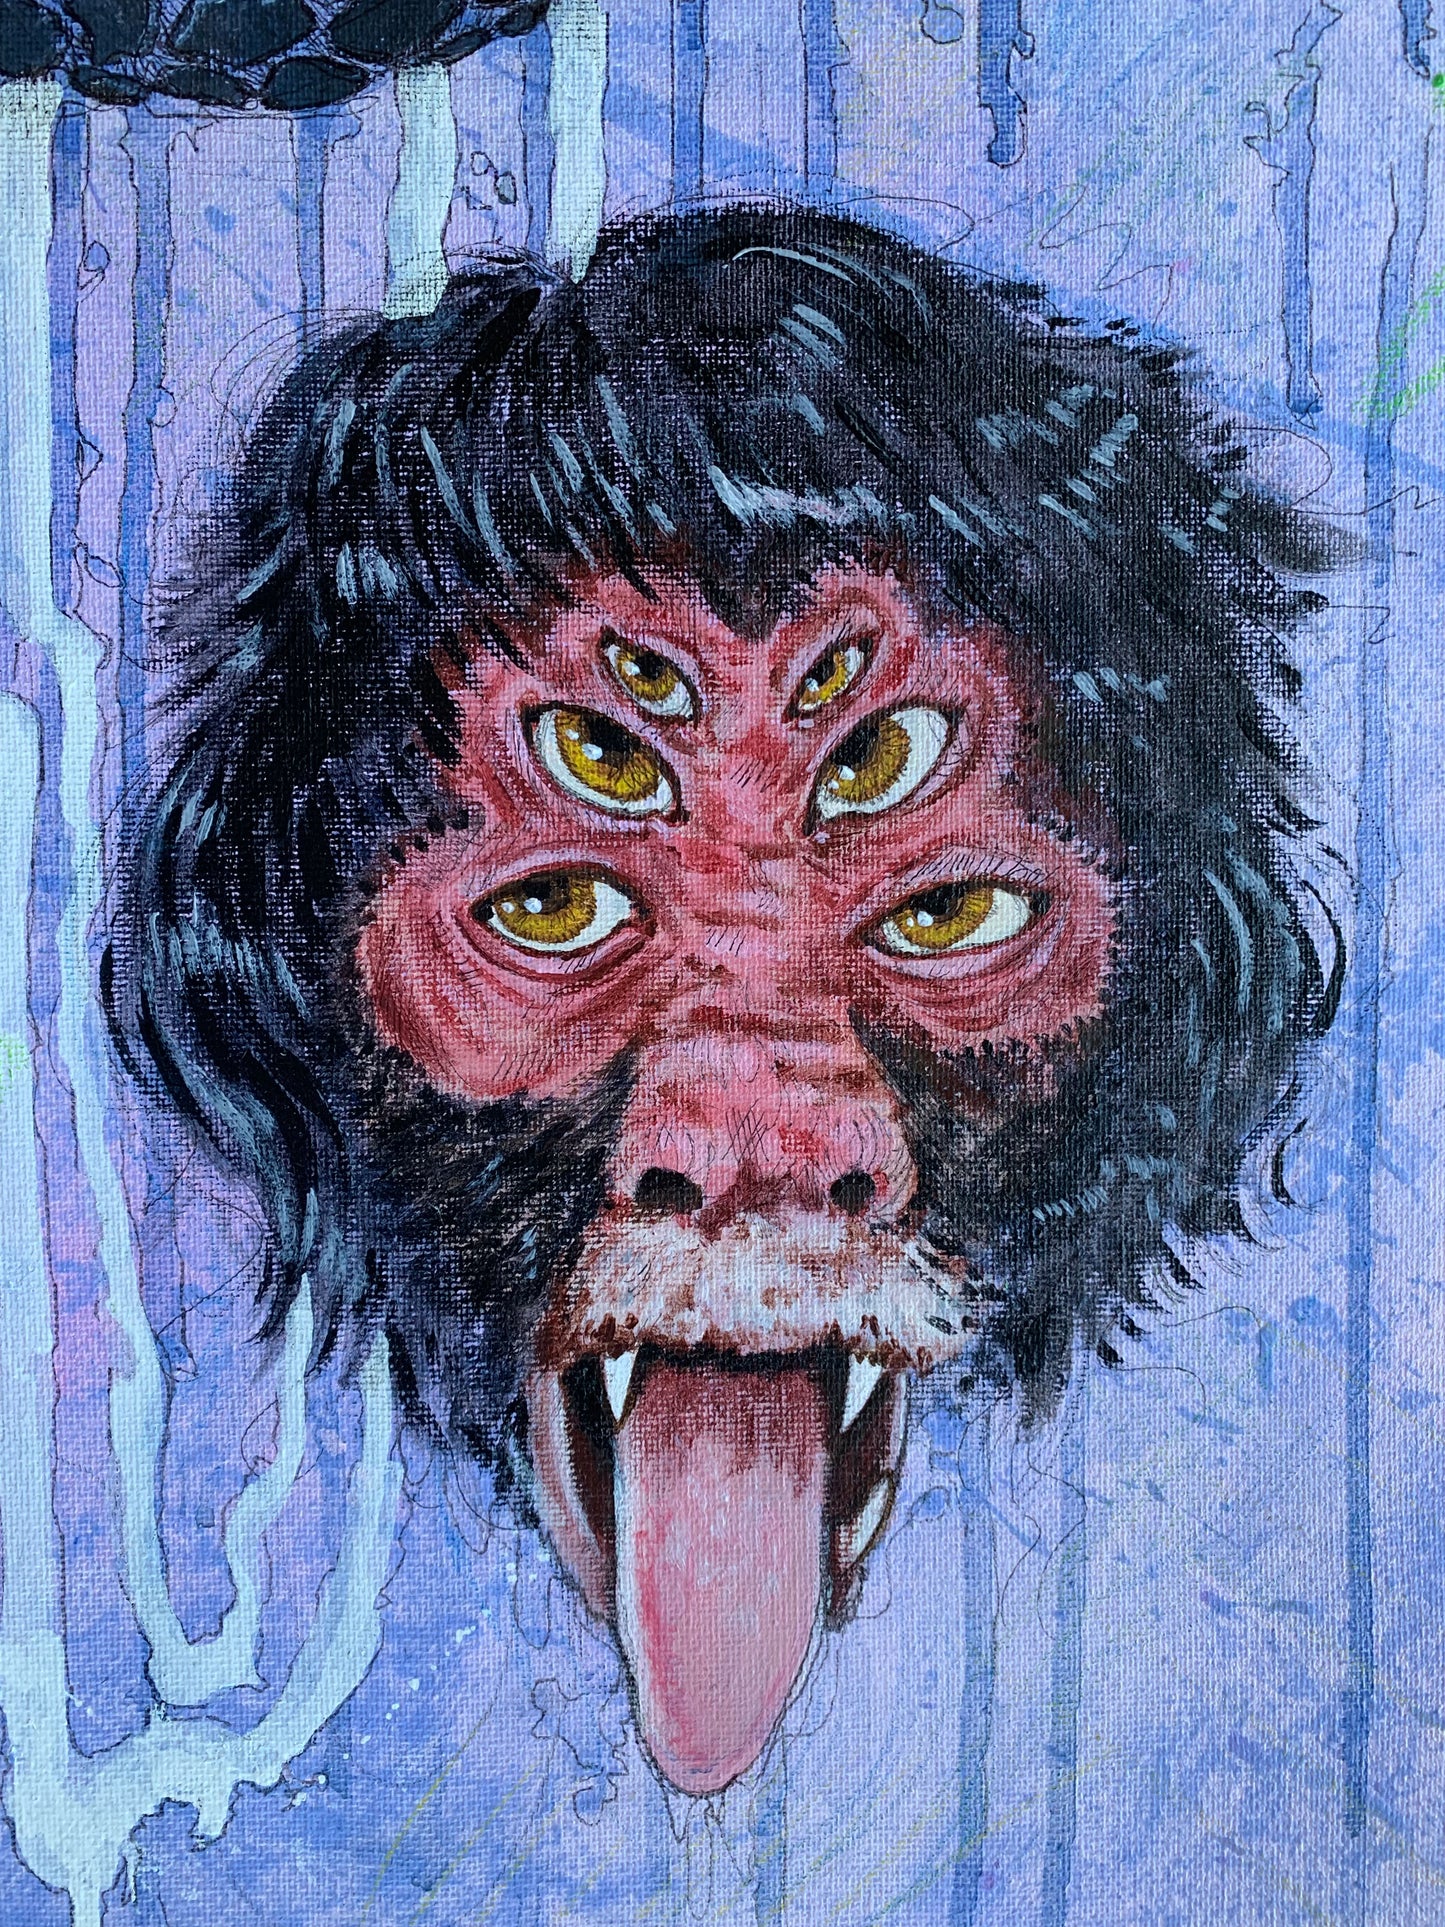 Spider Monkey original painting